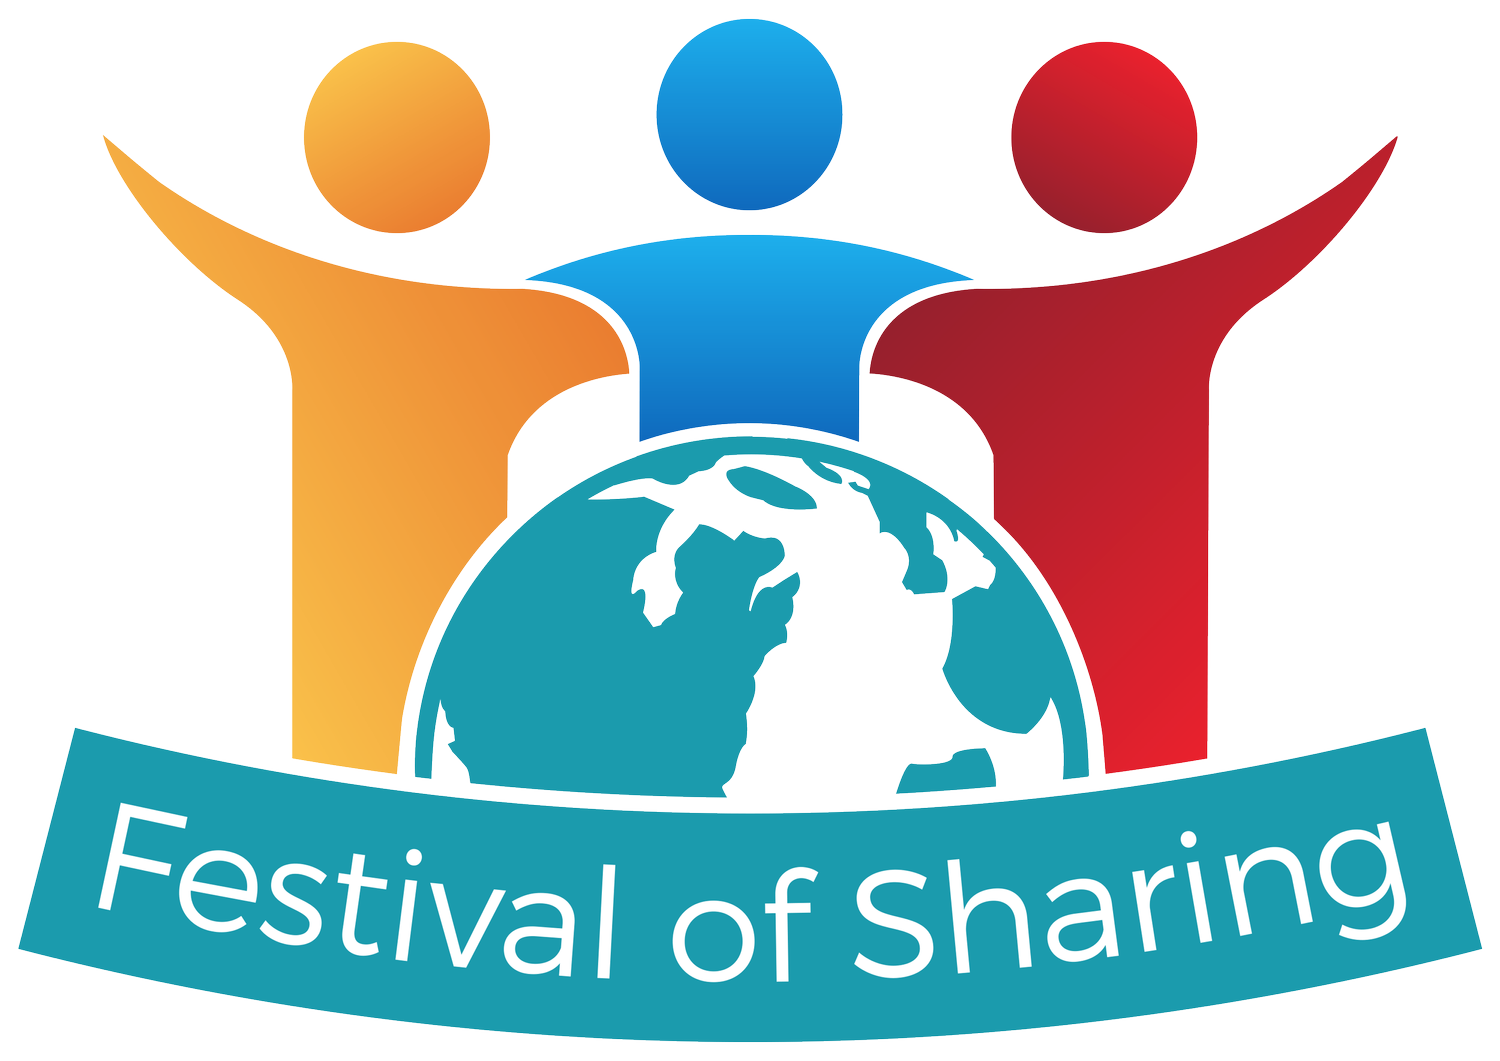 Festival of Sharing